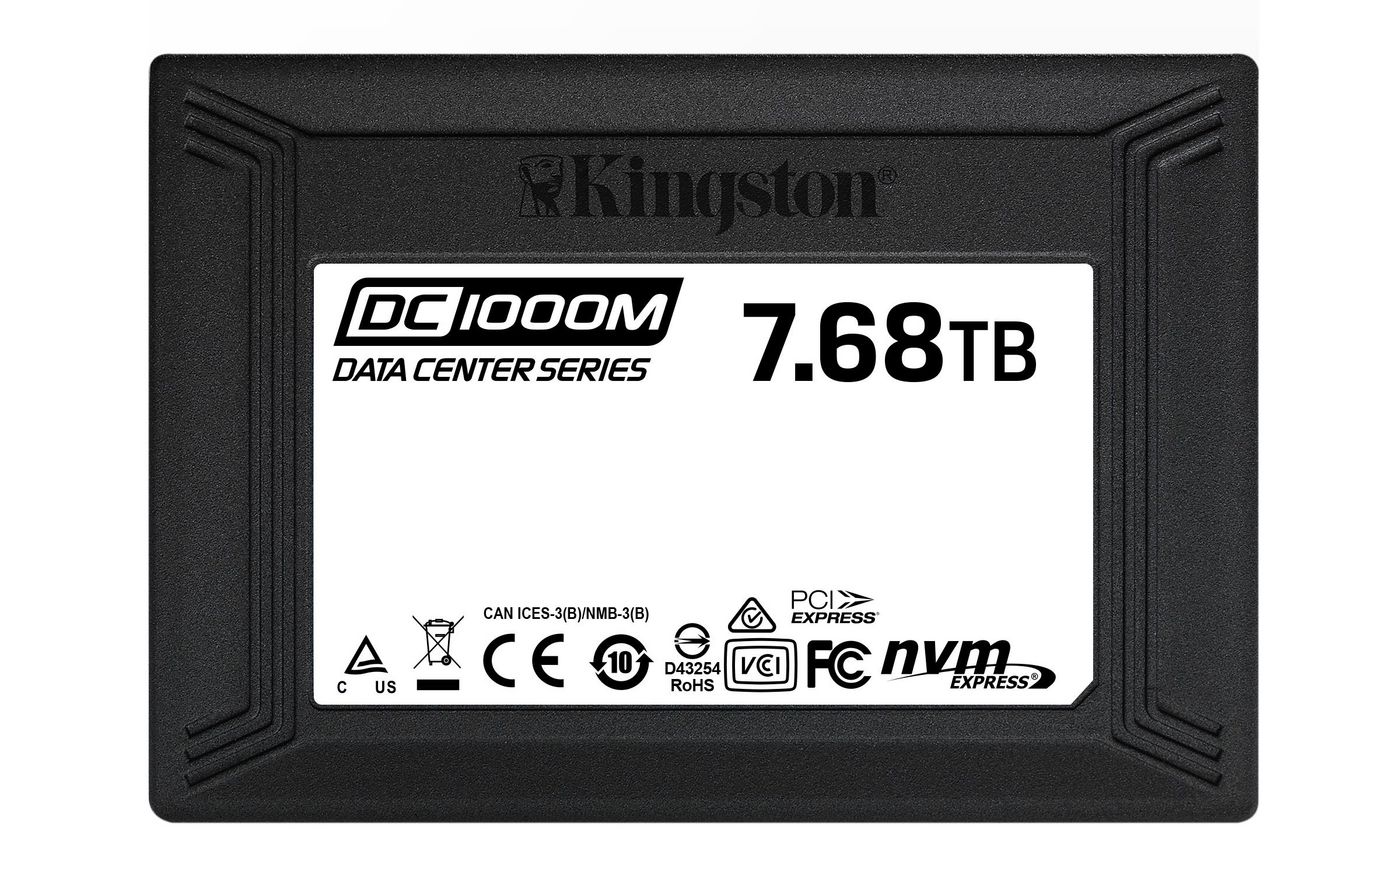 Kingston SEDC1000M7680G W128289770 Dc1000M 2.5 7680 Gb U.2 3D 